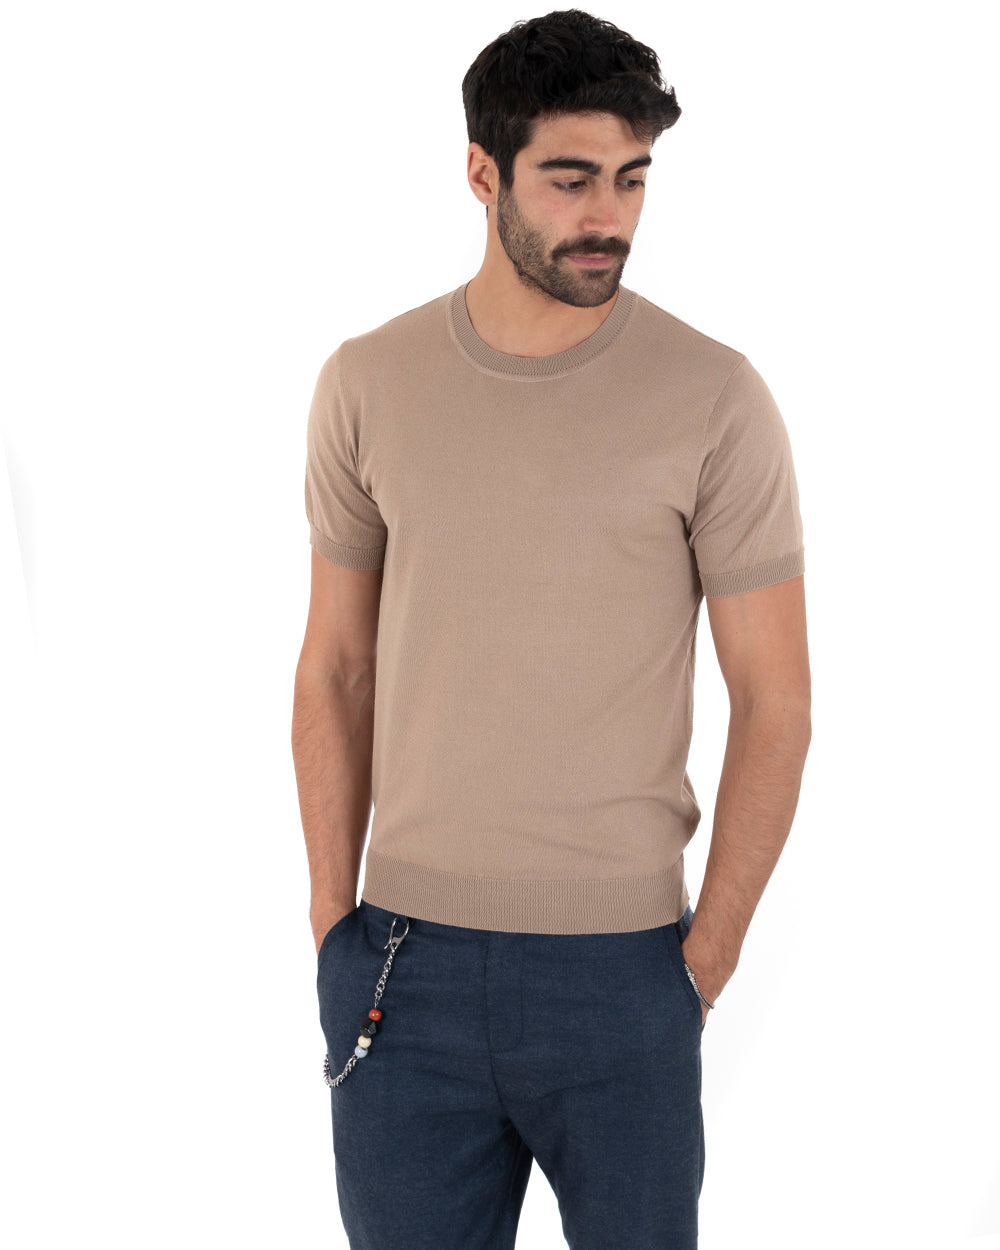 T-Shirt Uomo Maniche Corte Tinta Unita Camel Girocollo Filo Casual GIOSAL-TS3053A